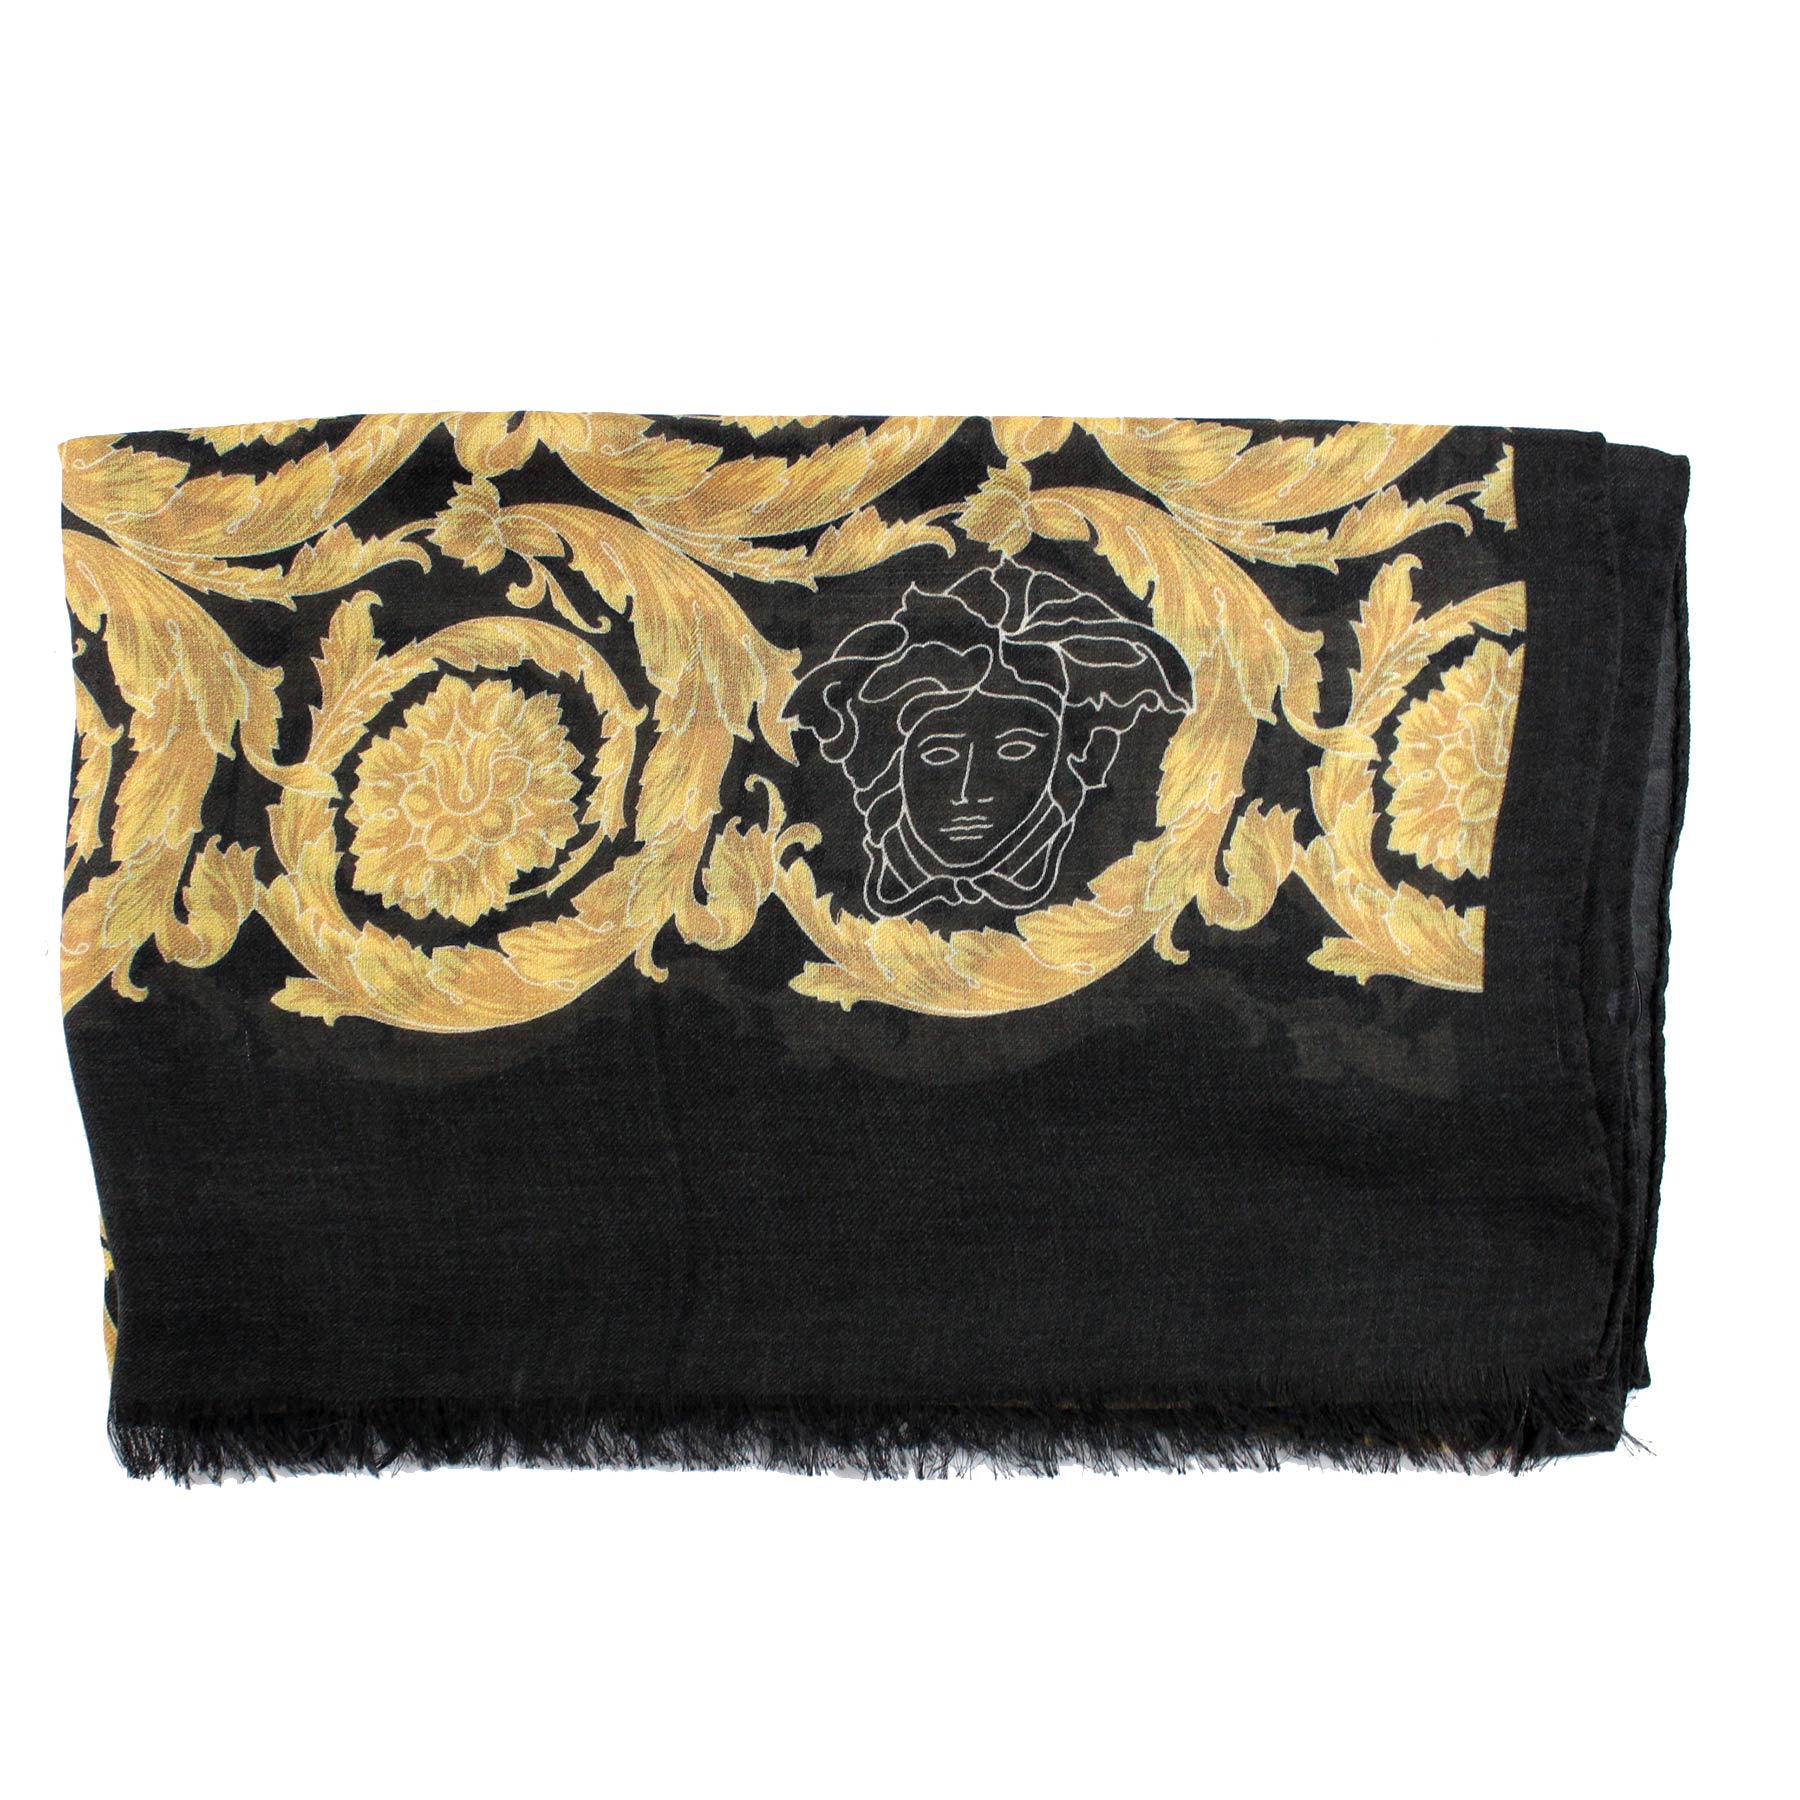 Versace Medusa Baroque Lilac Silk Upholstery Art Fabric - 140cmx140cm